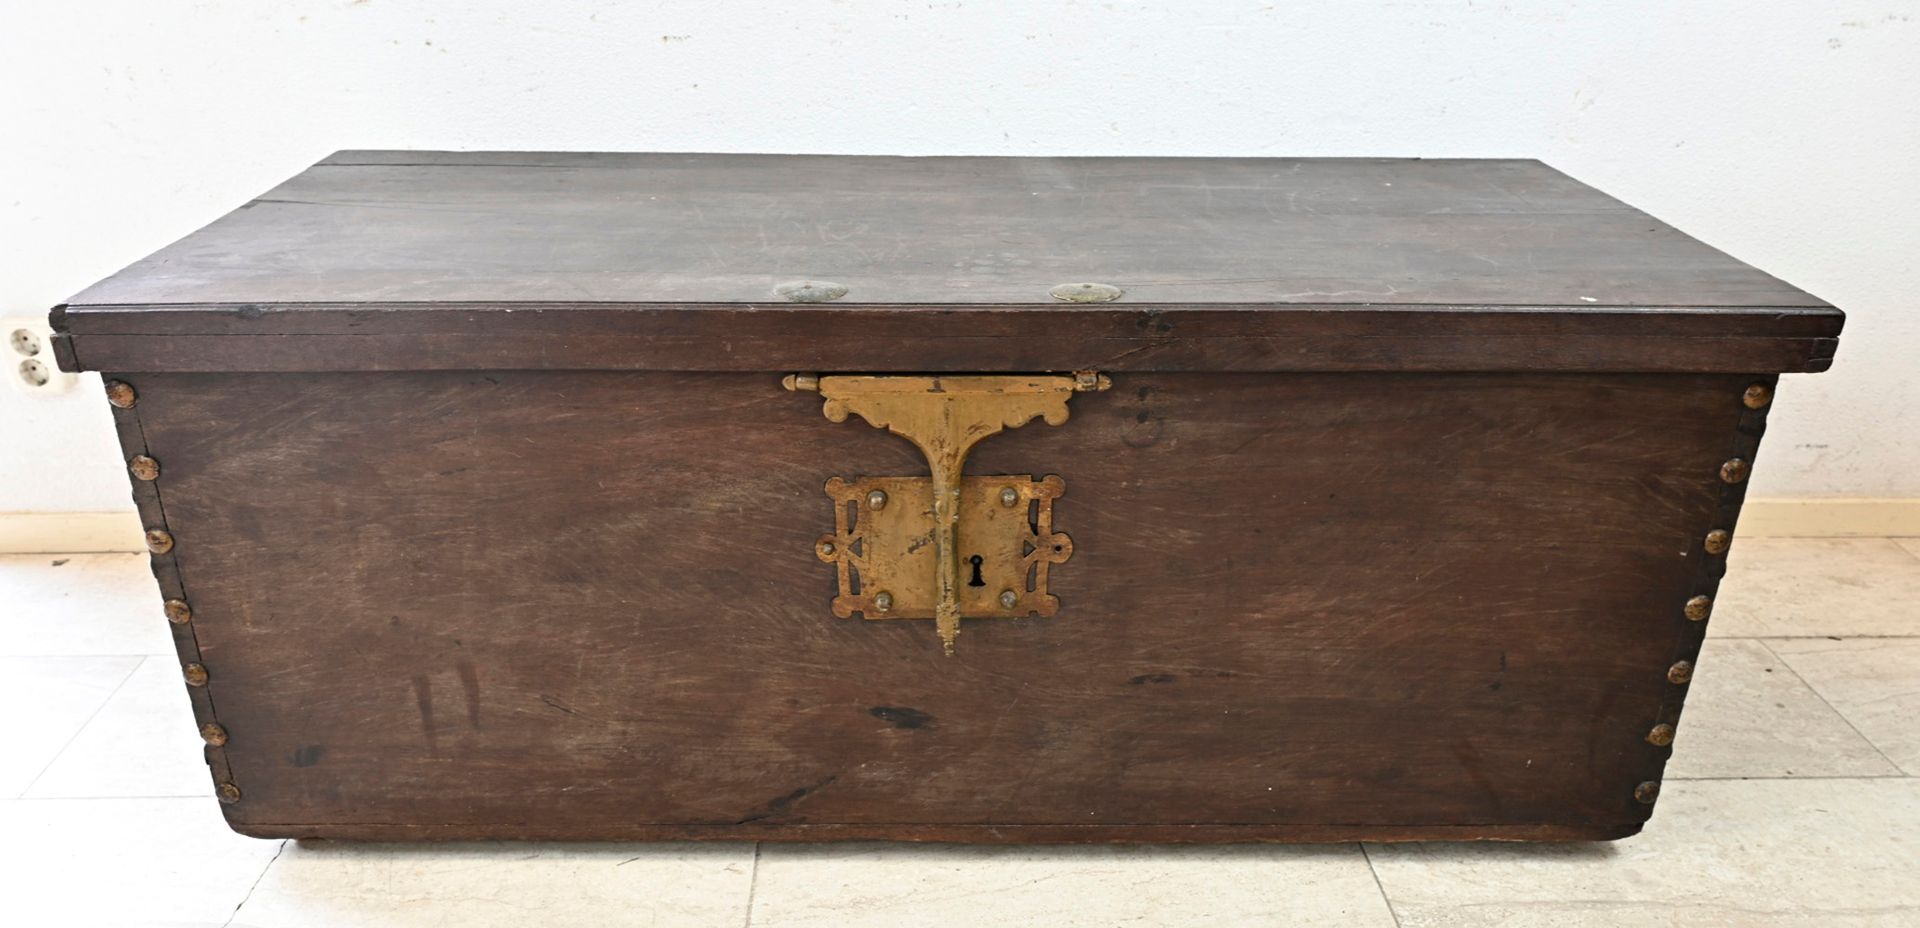 Null 18-19 世纪殖民时期的柚木船箱，带有原装配件、锁和铜锈。尺寸：58 x 145 x 64 厘米：58 x 145 x 64 厘米。状况良好。